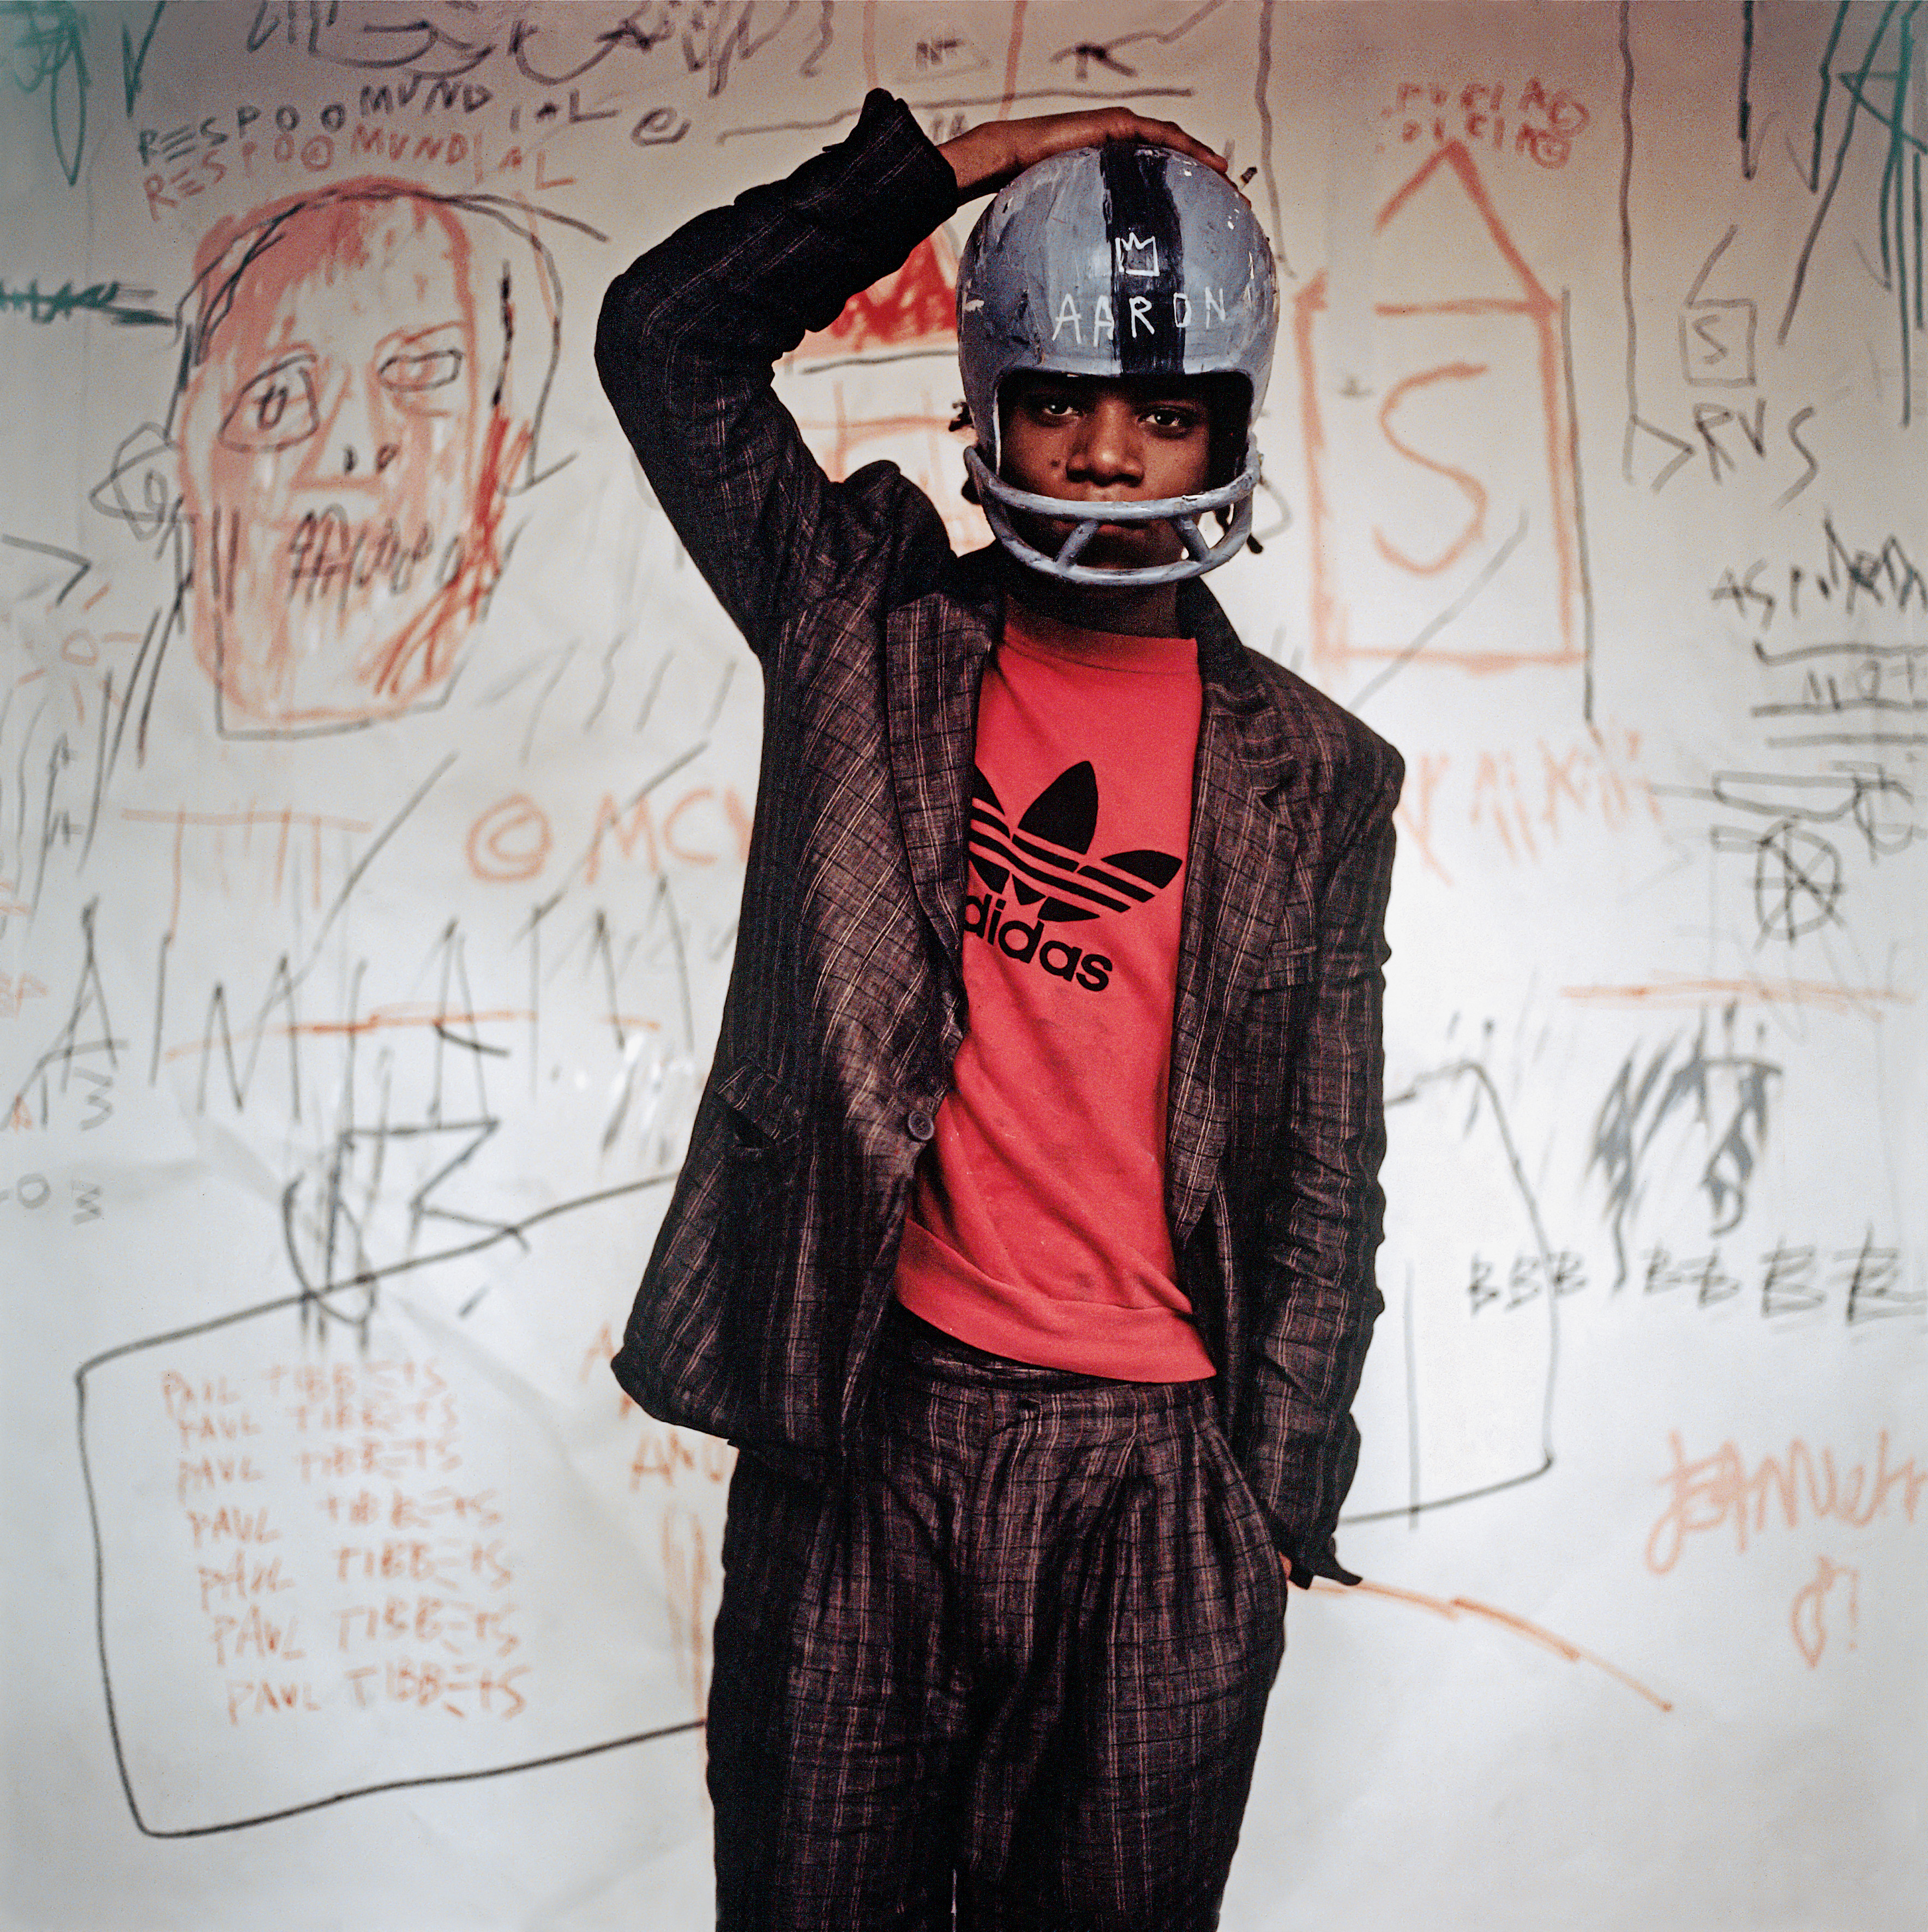 Edo Bertoglio, Jean-Michel Basquiat wearing an American football helmet, 1981, Photo: © Edo Bertoglio, courtesy of Maripol, Artwork: © VG Bild-Kunst Bonn, 2018 & The Estate of Jean-Michel Basquiat, Licensed by Artestar, New York